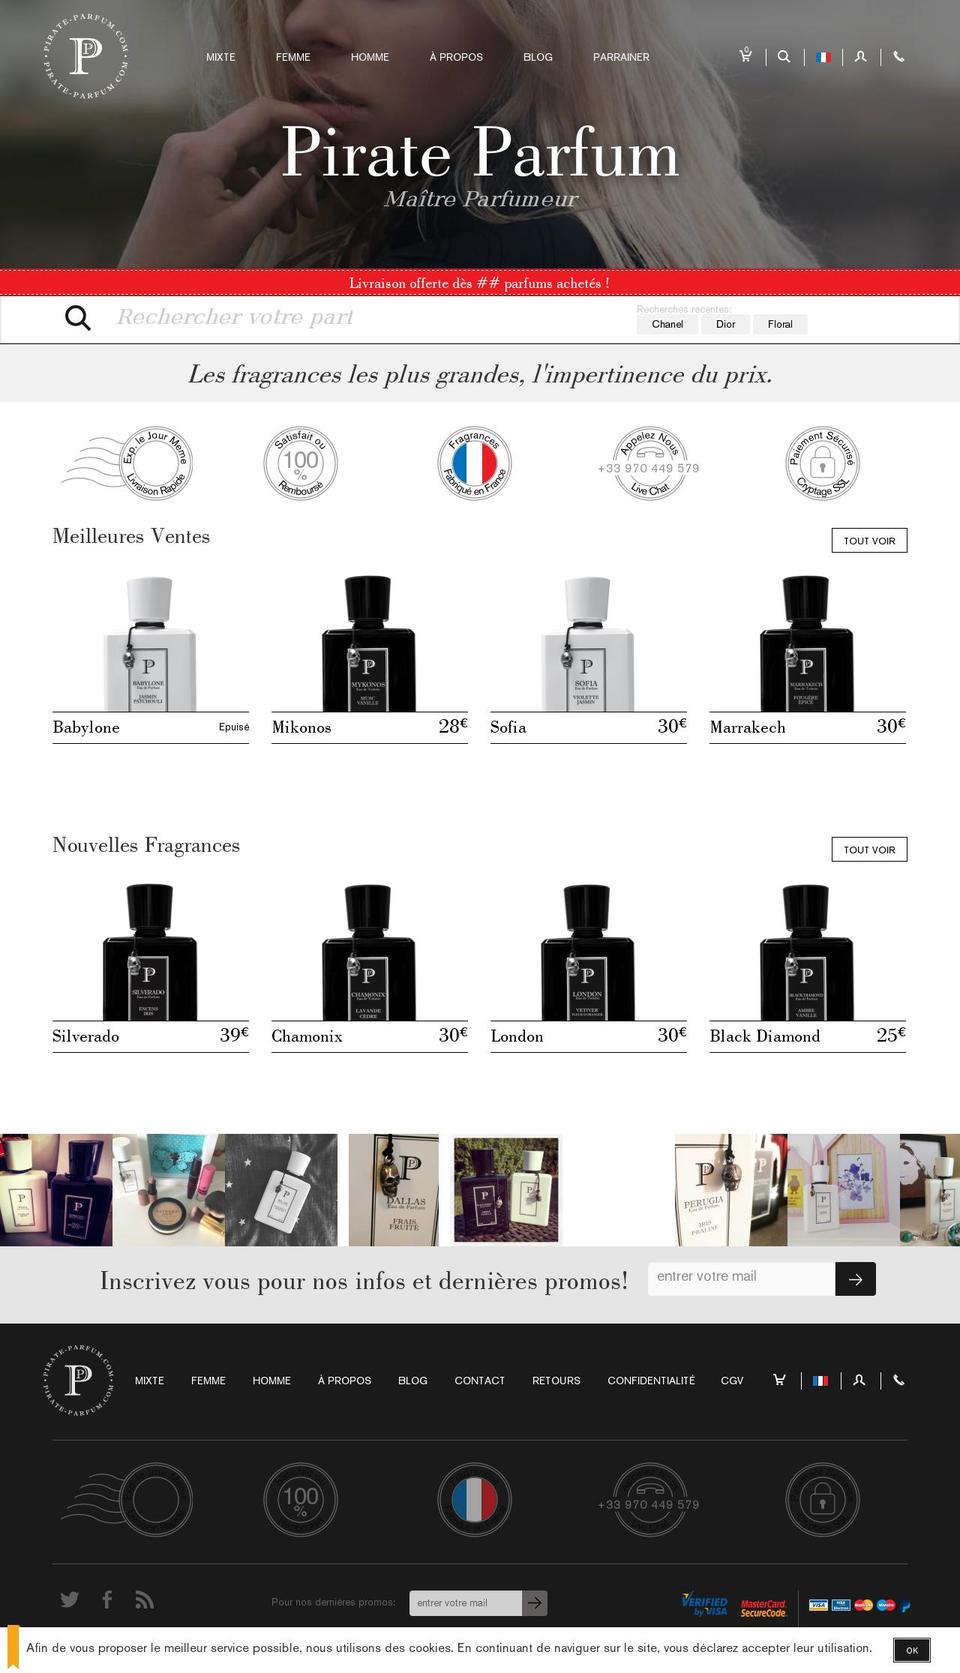 pirate-parfum.fr shopify website screenshot